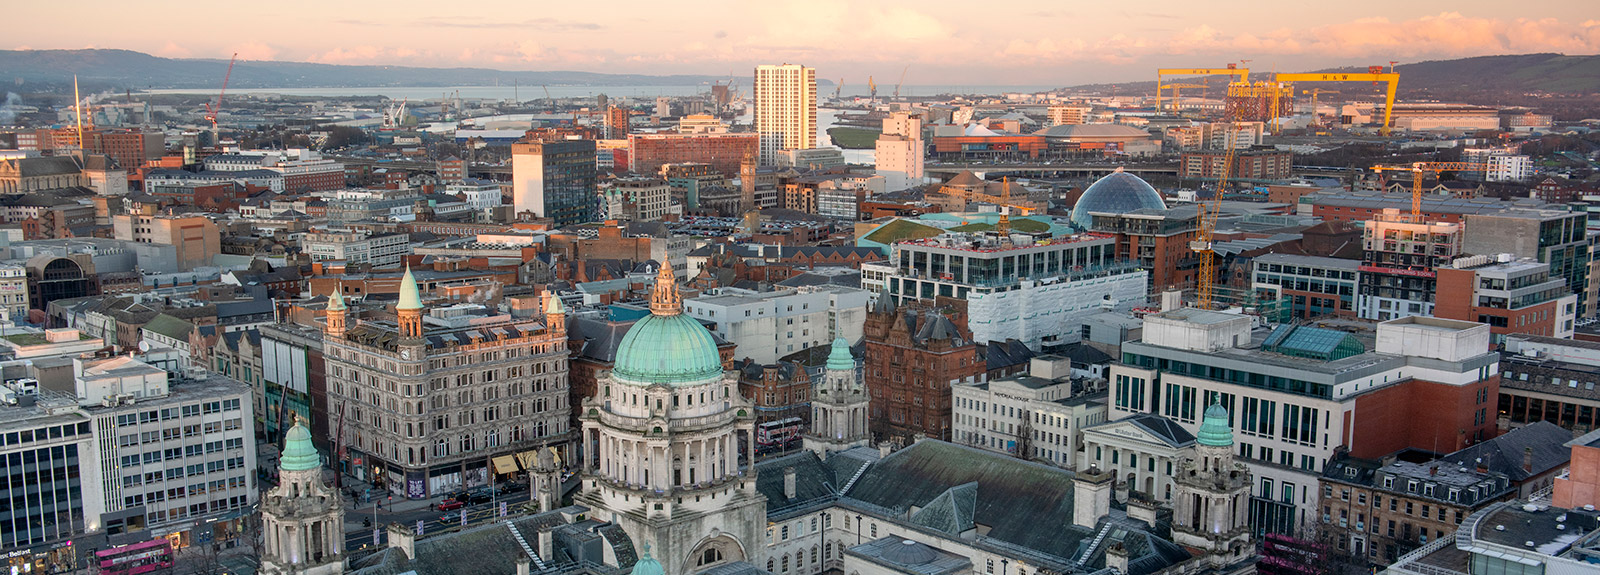 Belfast City Centre - aerial view